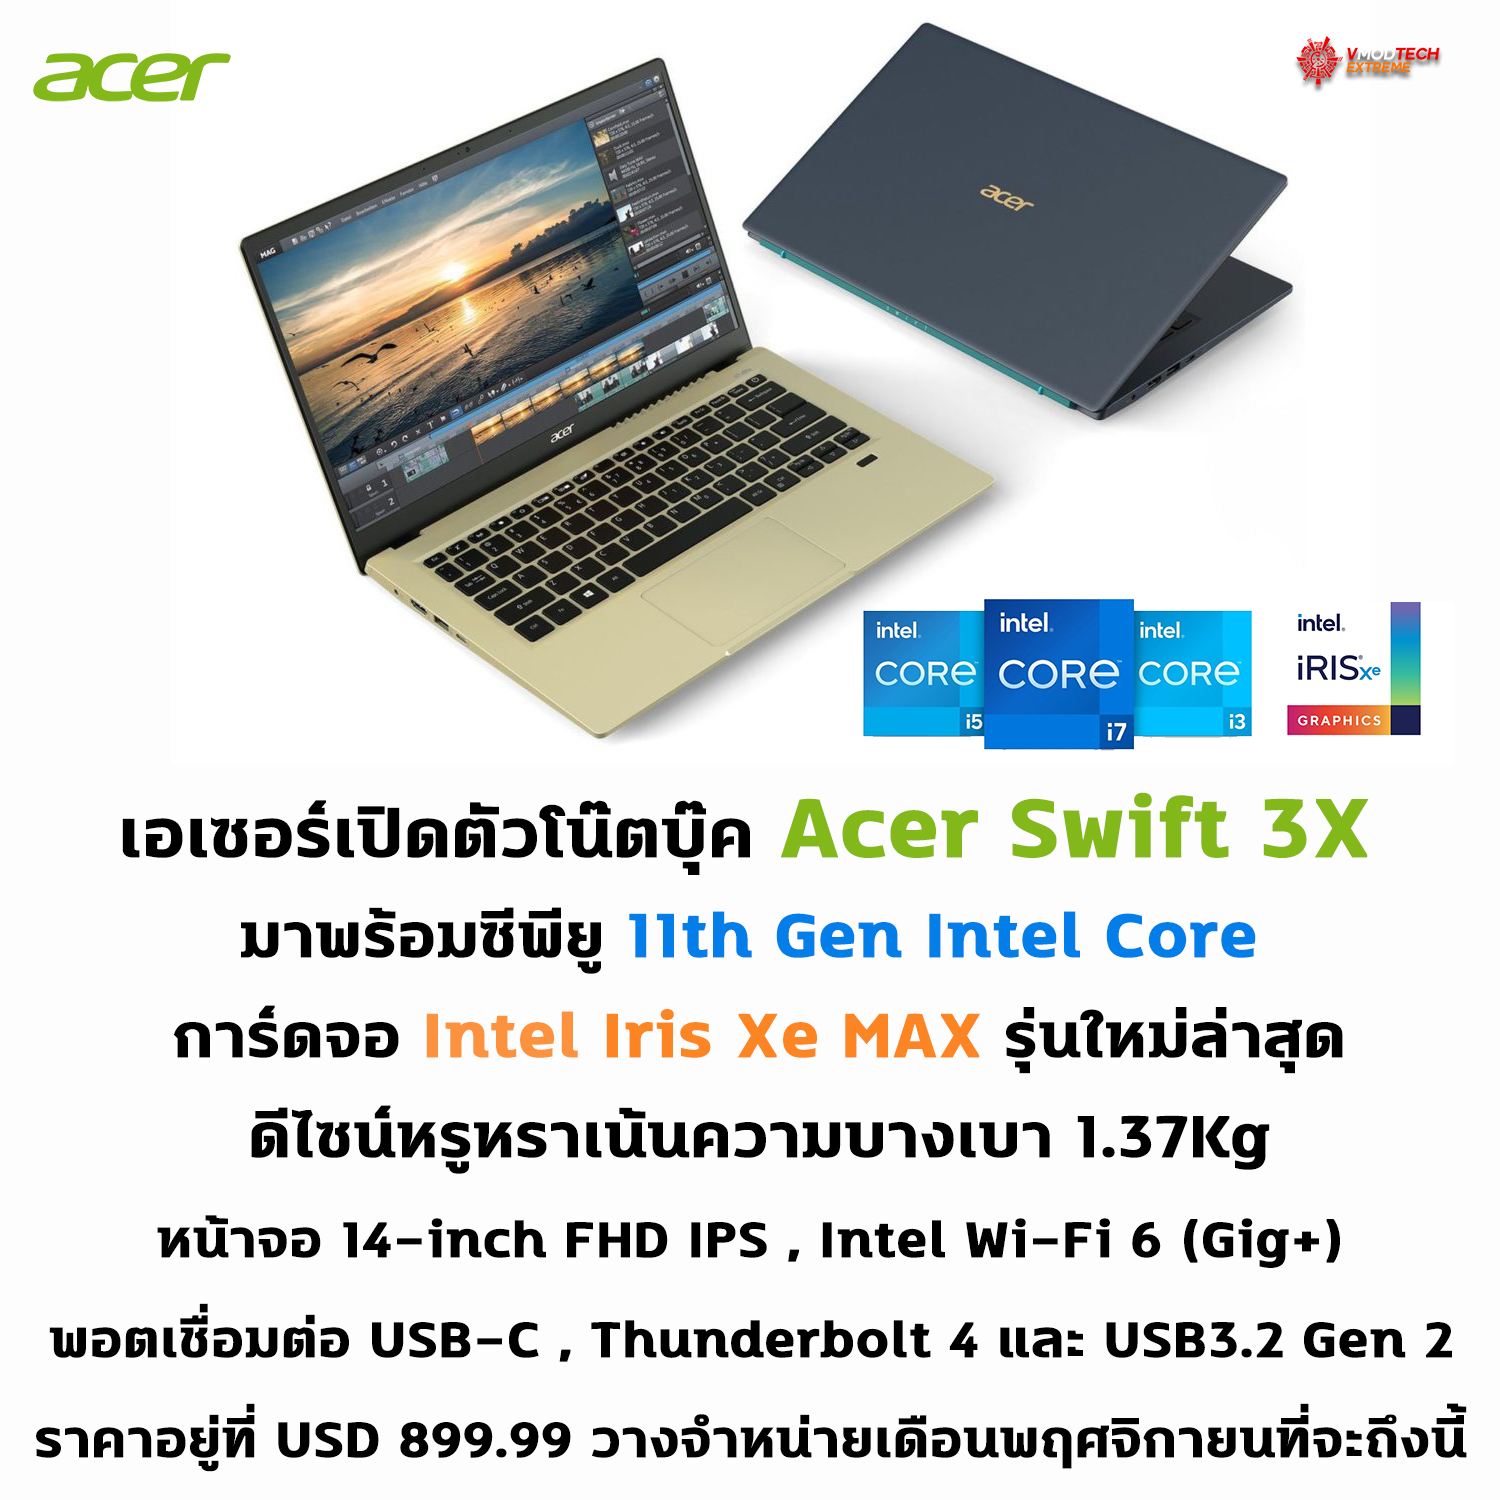 acer swift 3x1 เอเซอร์เปิดตัวโน๊ตบุ๊ค Acer Swift 3X มาพร้อมซีพียู 11th Gen Intel Core การ์ดจอ Intel Iris Xe MAX รุ่นใหม่ล่าสุด 